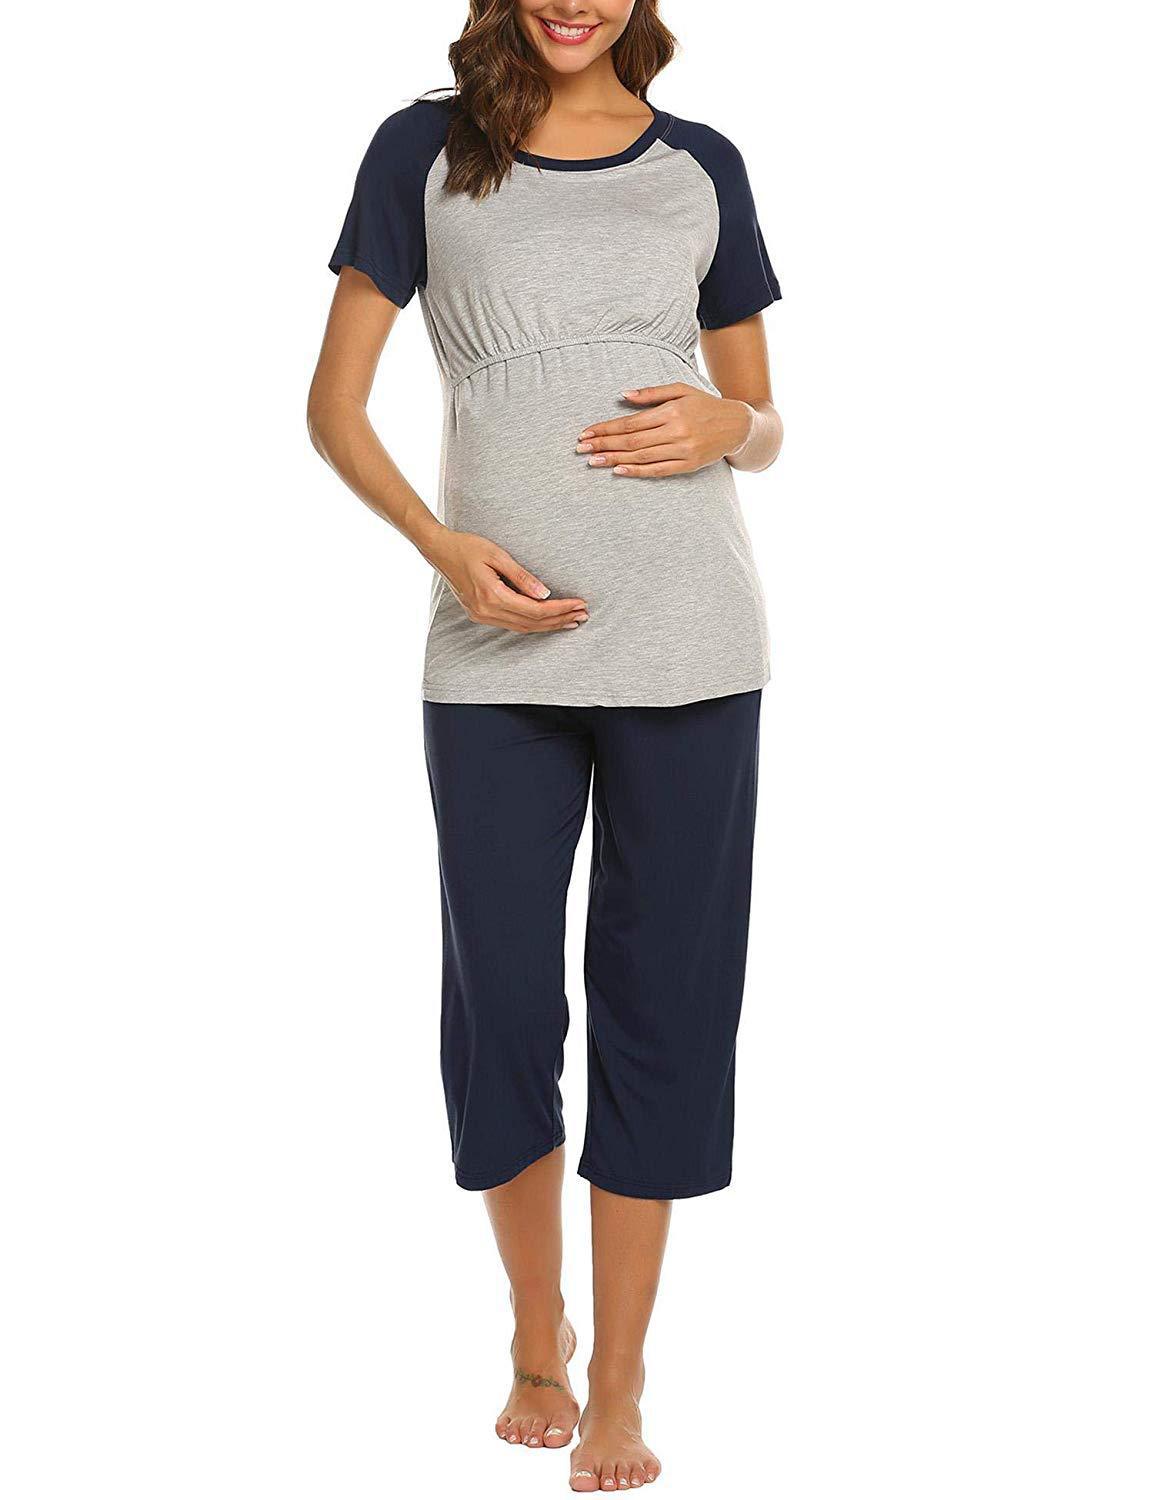 Maternity Short-sleeved Solid Color Stitching Nursing Tops Pajamas Set